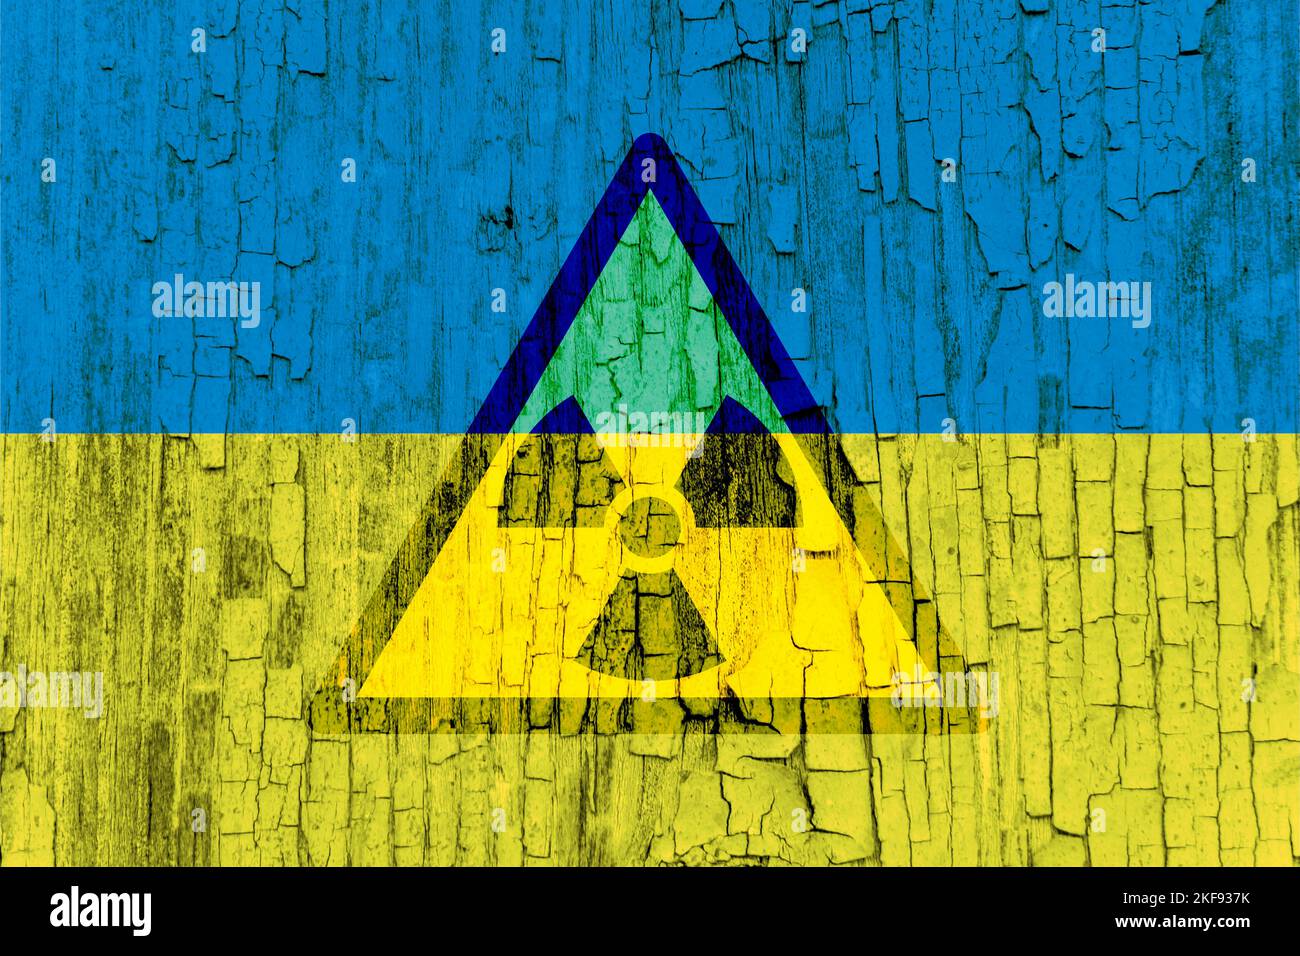 ukraine radioactivity dangerous russian agressor The politics behind Ukraine's alarming nuclear warnings Stock Photo